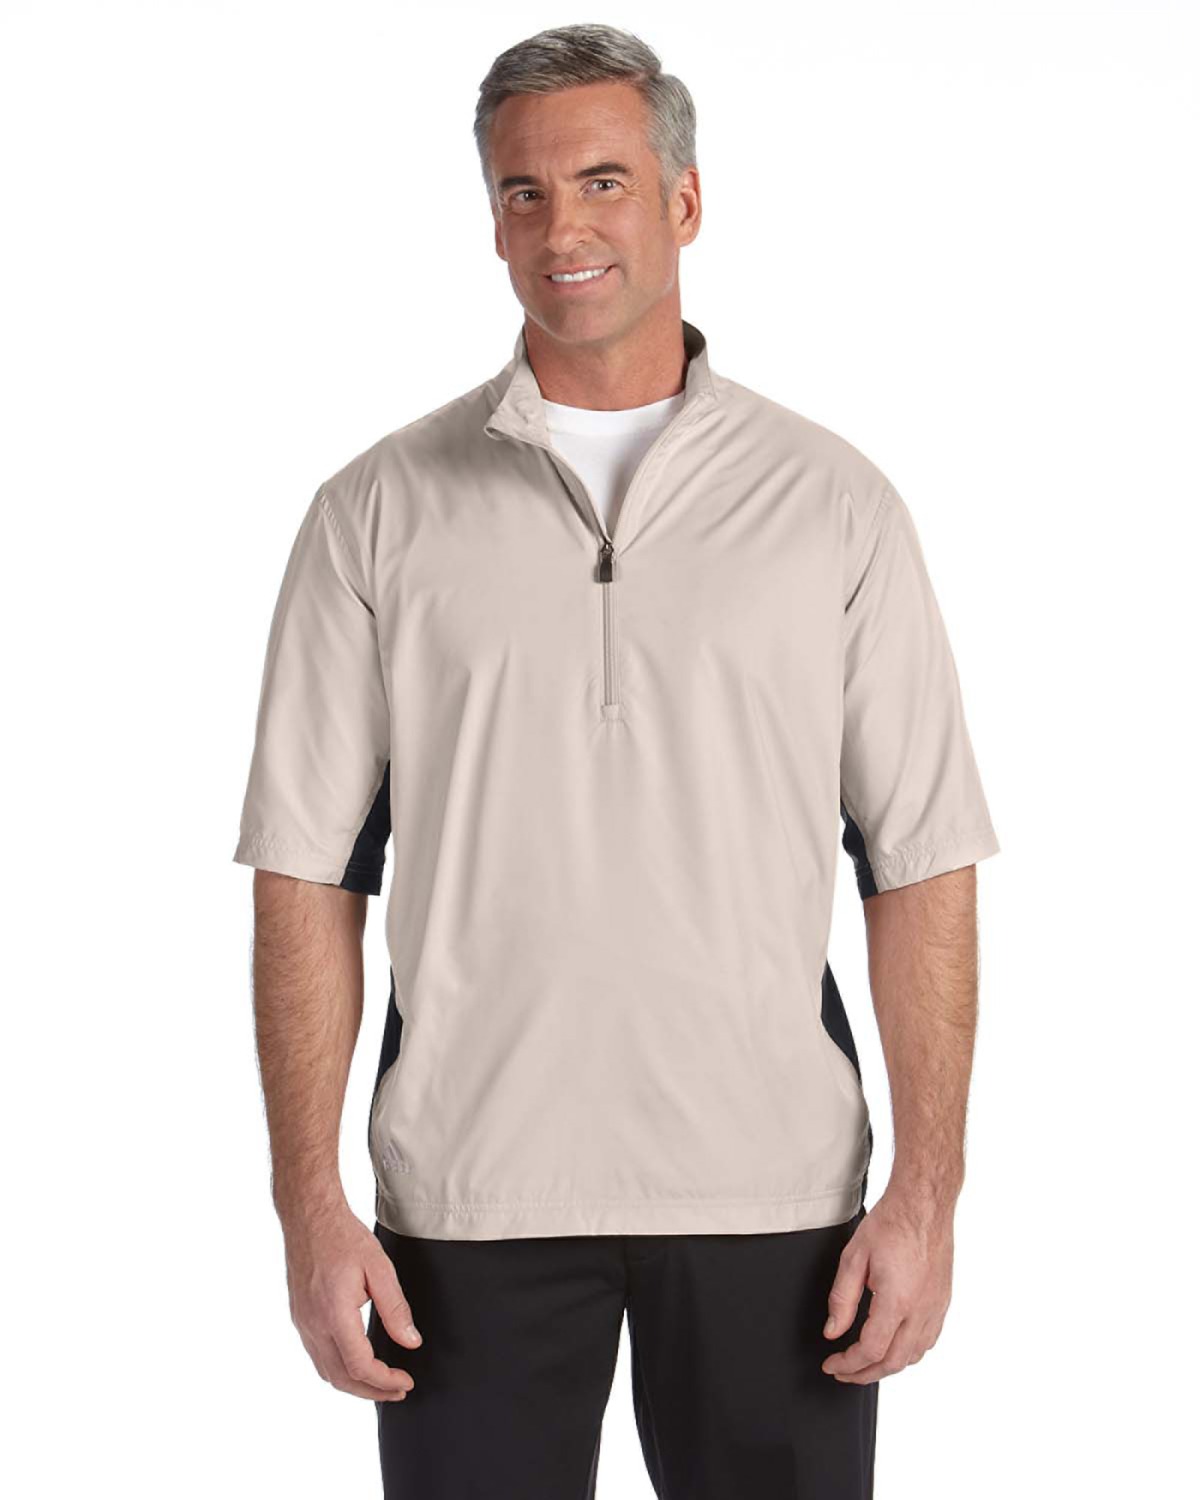 Adidas Golf A167 Men's ClimaLite Colorblock Half-Zip Wind Shirt Short ...